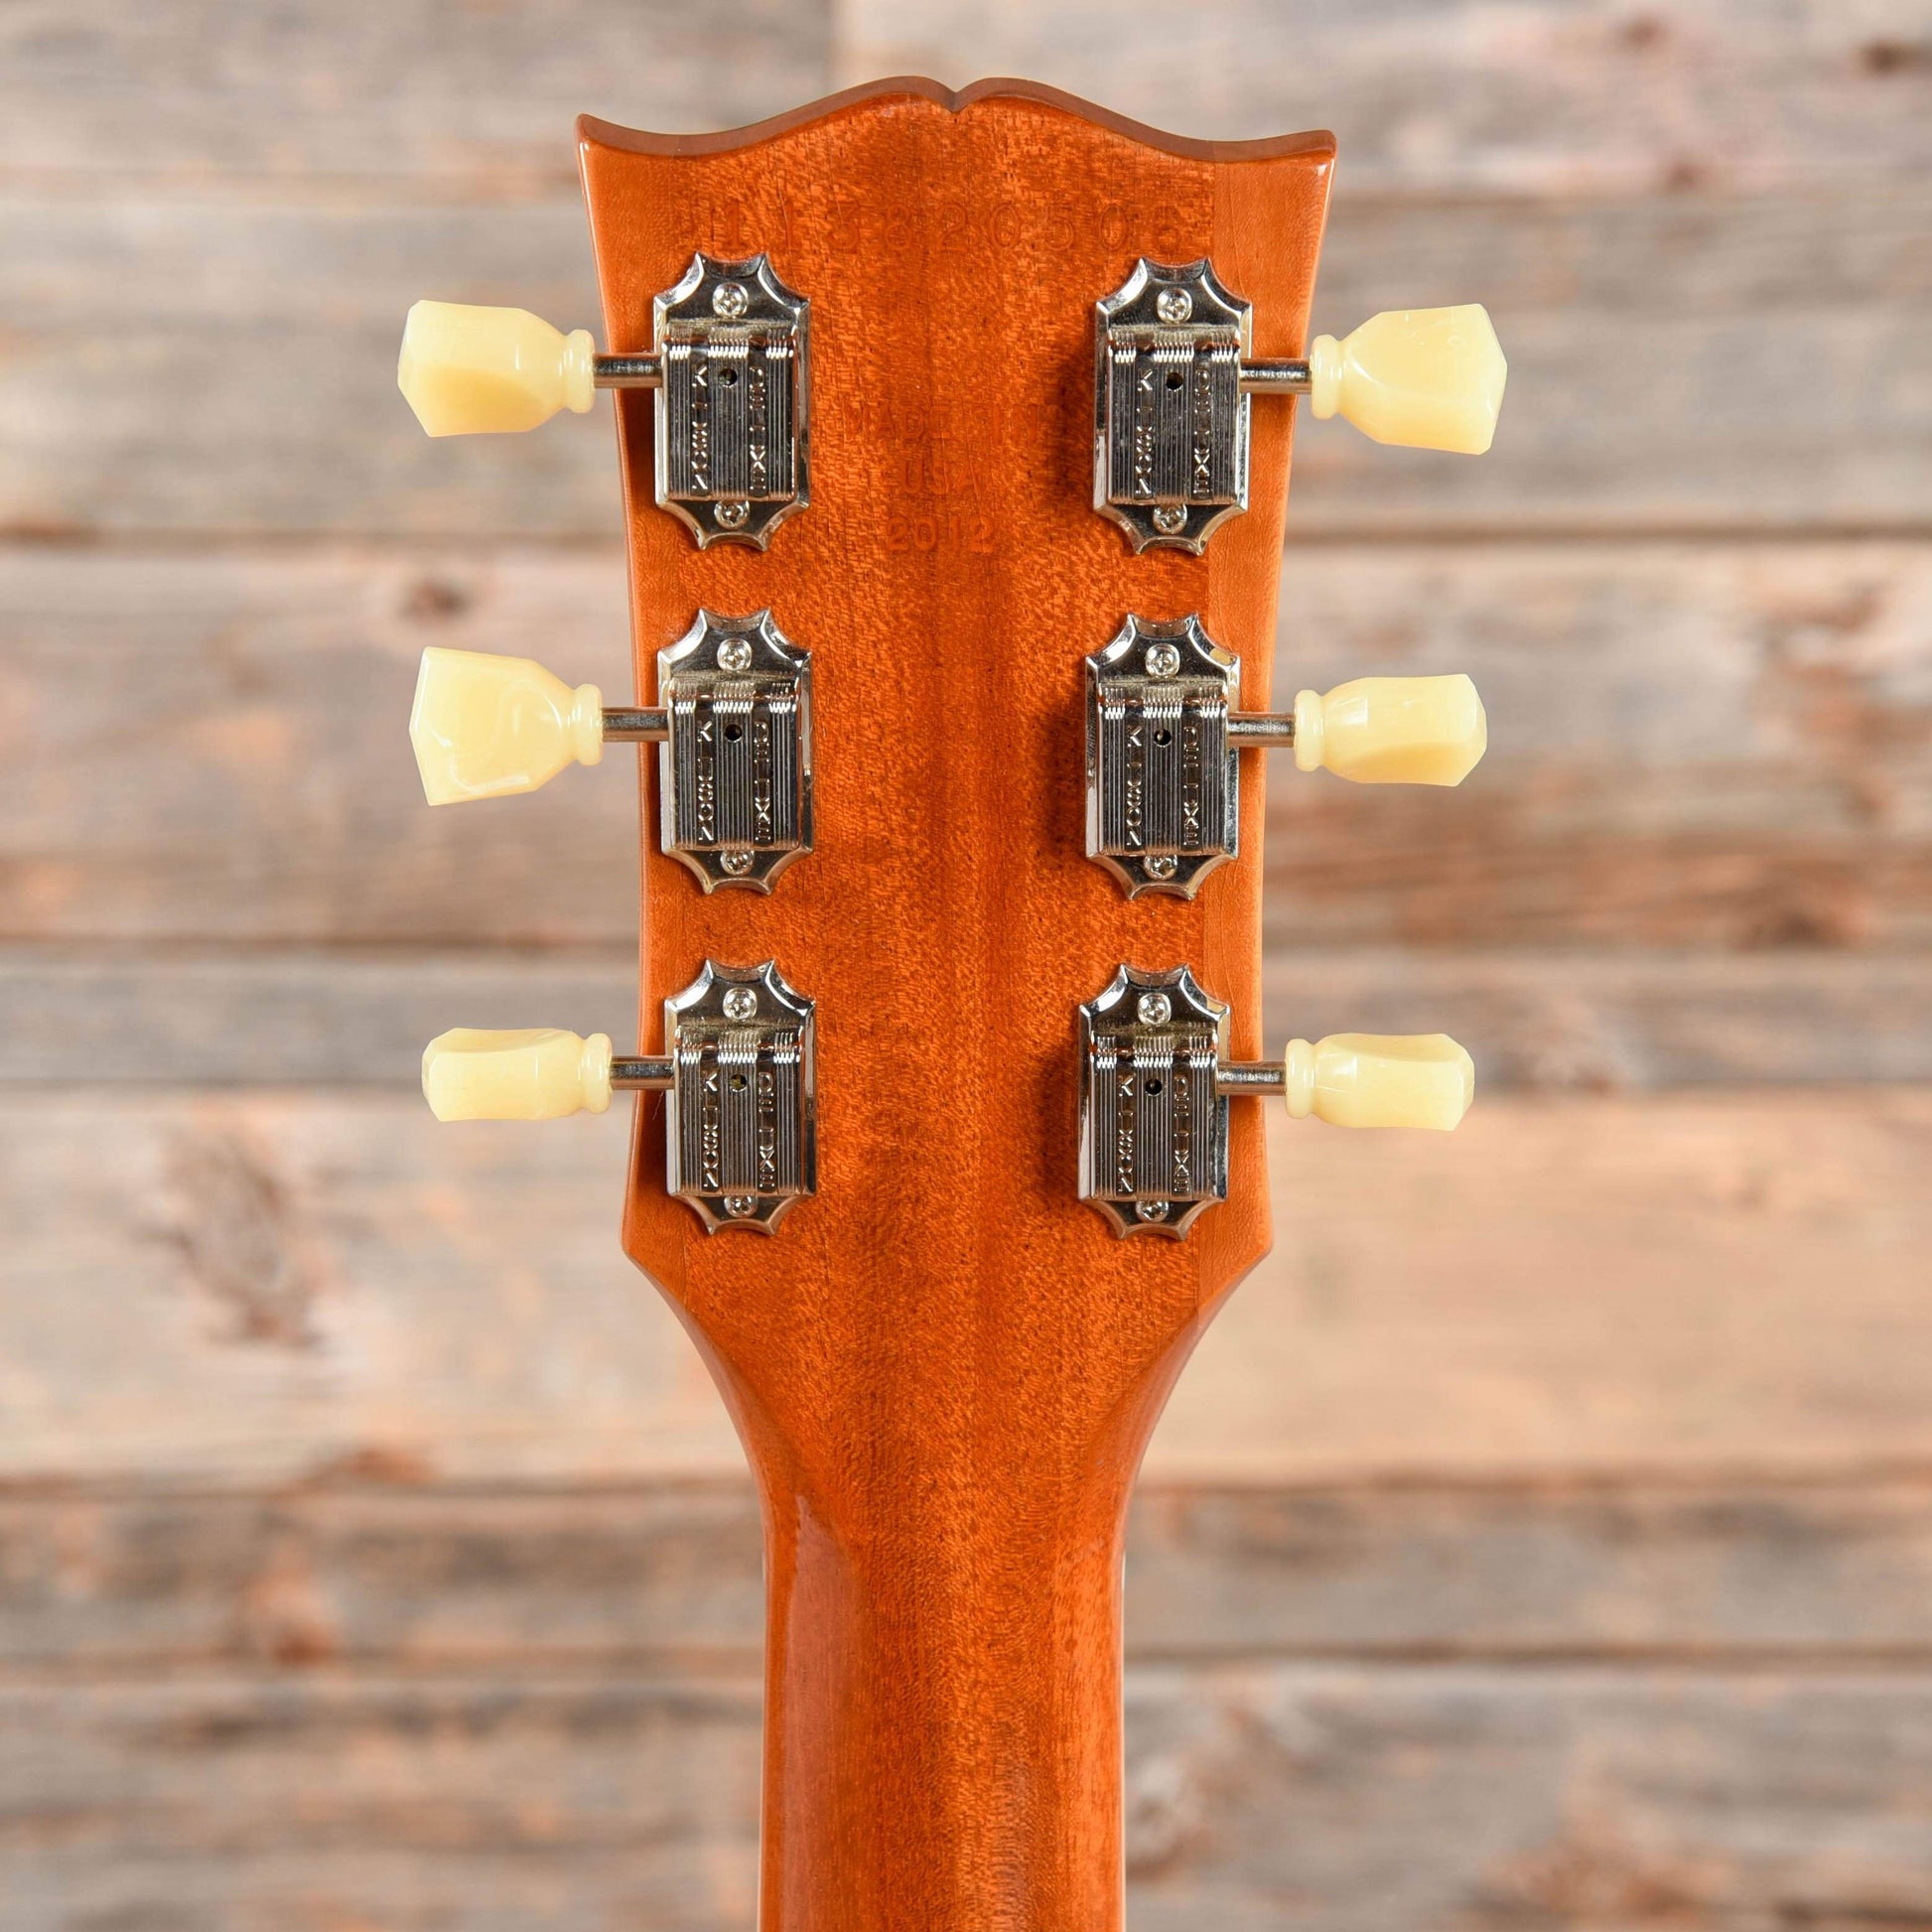 Gibson Jeff Tweedy SG Standard Blue Mist 2012 Electric Guitars / Solid Body